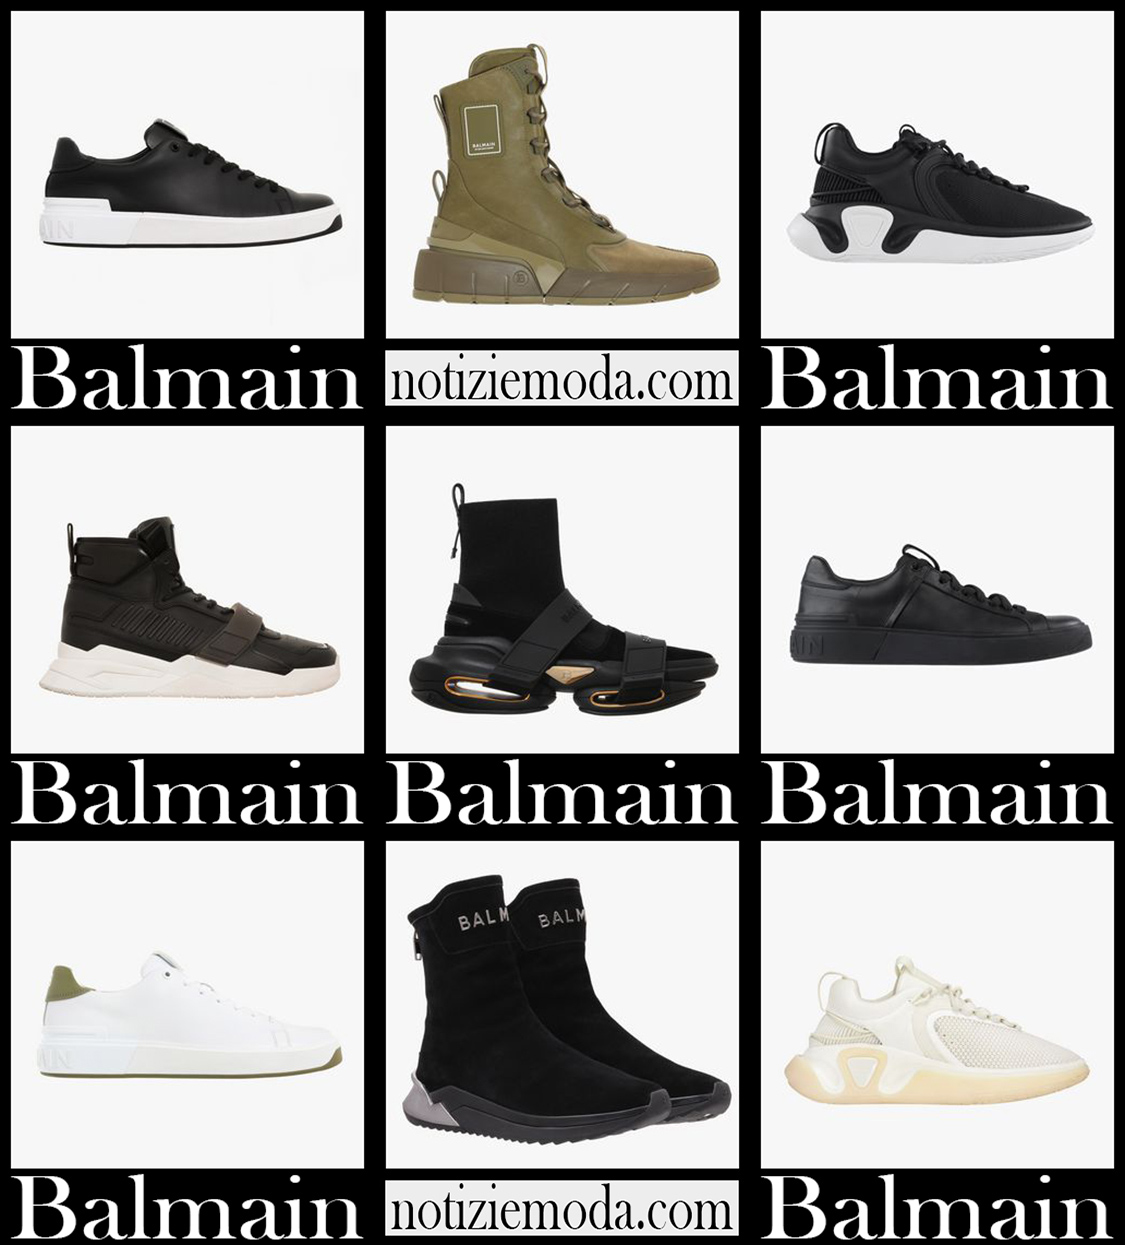 Nuovi arrivi sneakers Balmain 2021 calzature moda uomo